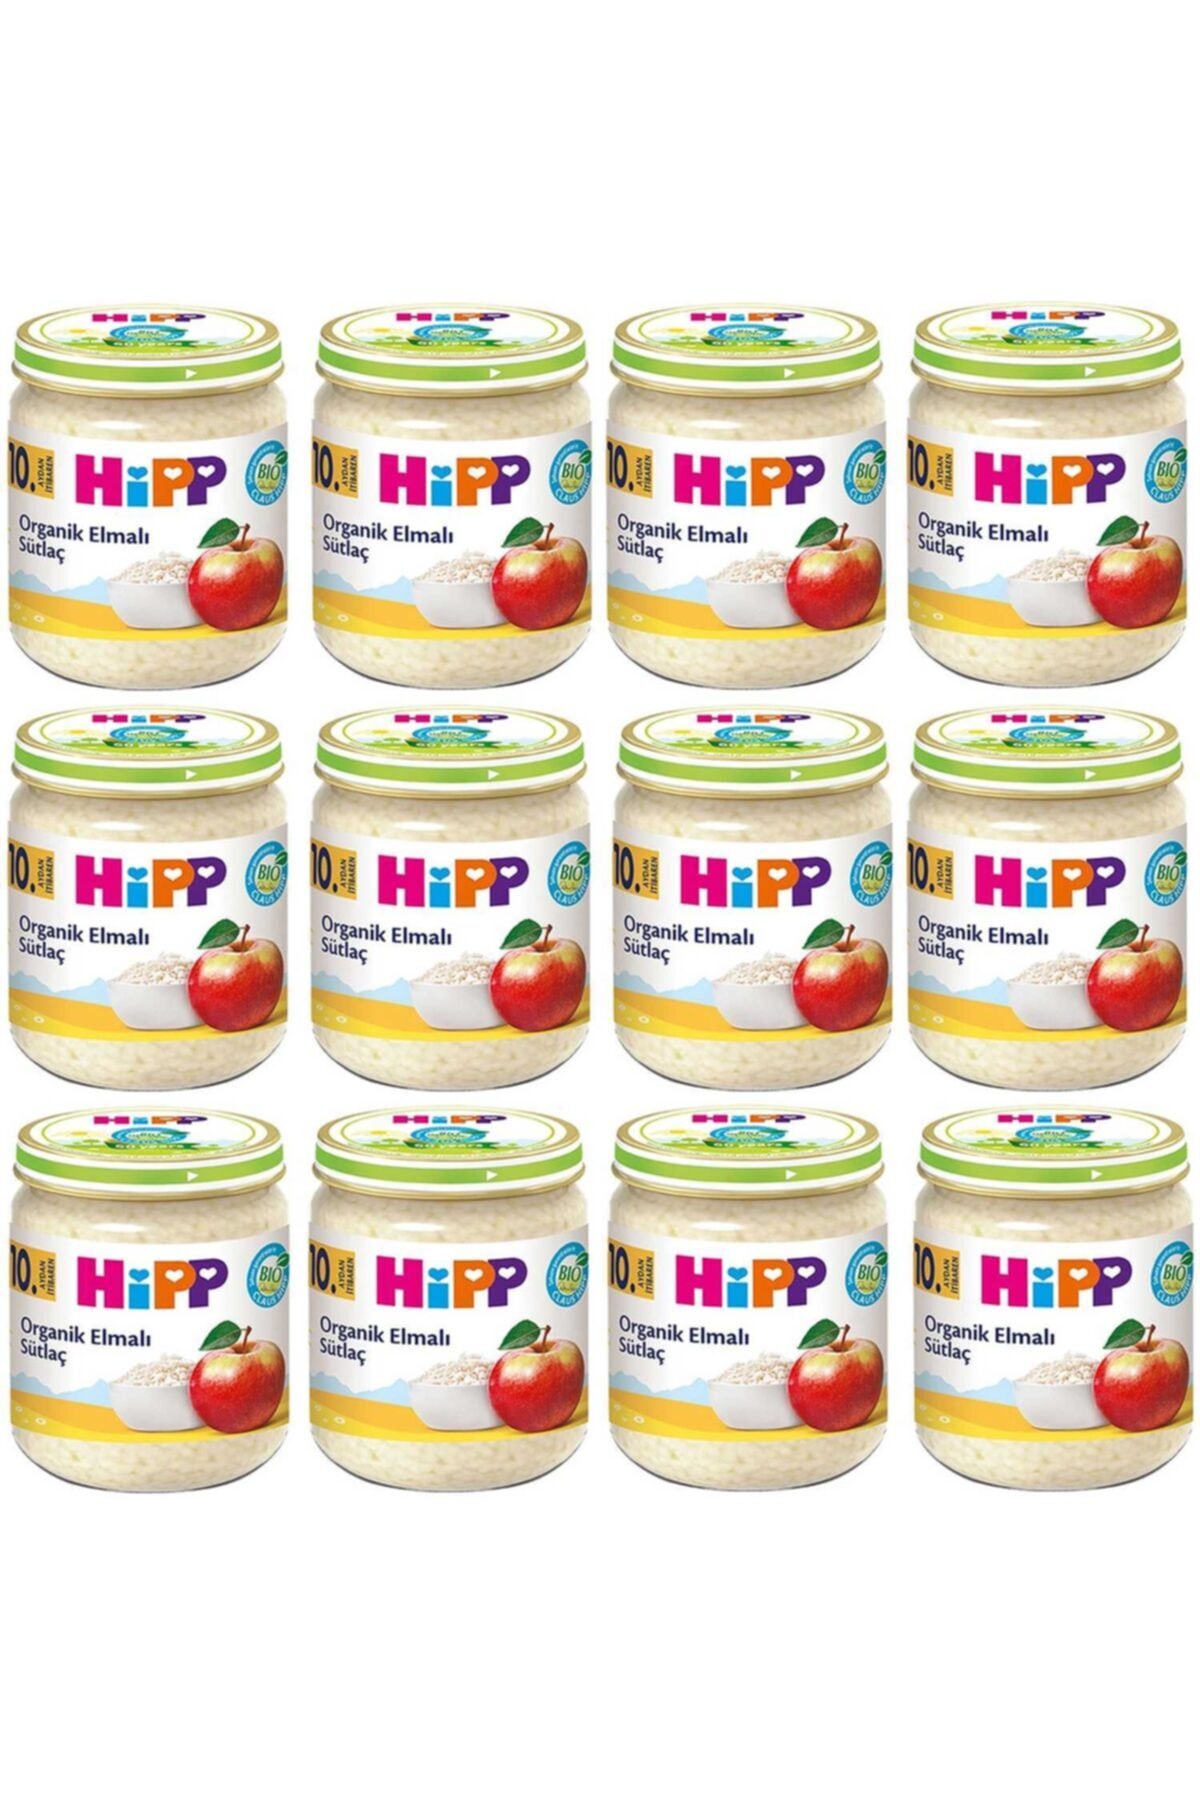 Hipp Kavanoz Maması Organik Elmalı Sütlaç 200 gr 12 Adet